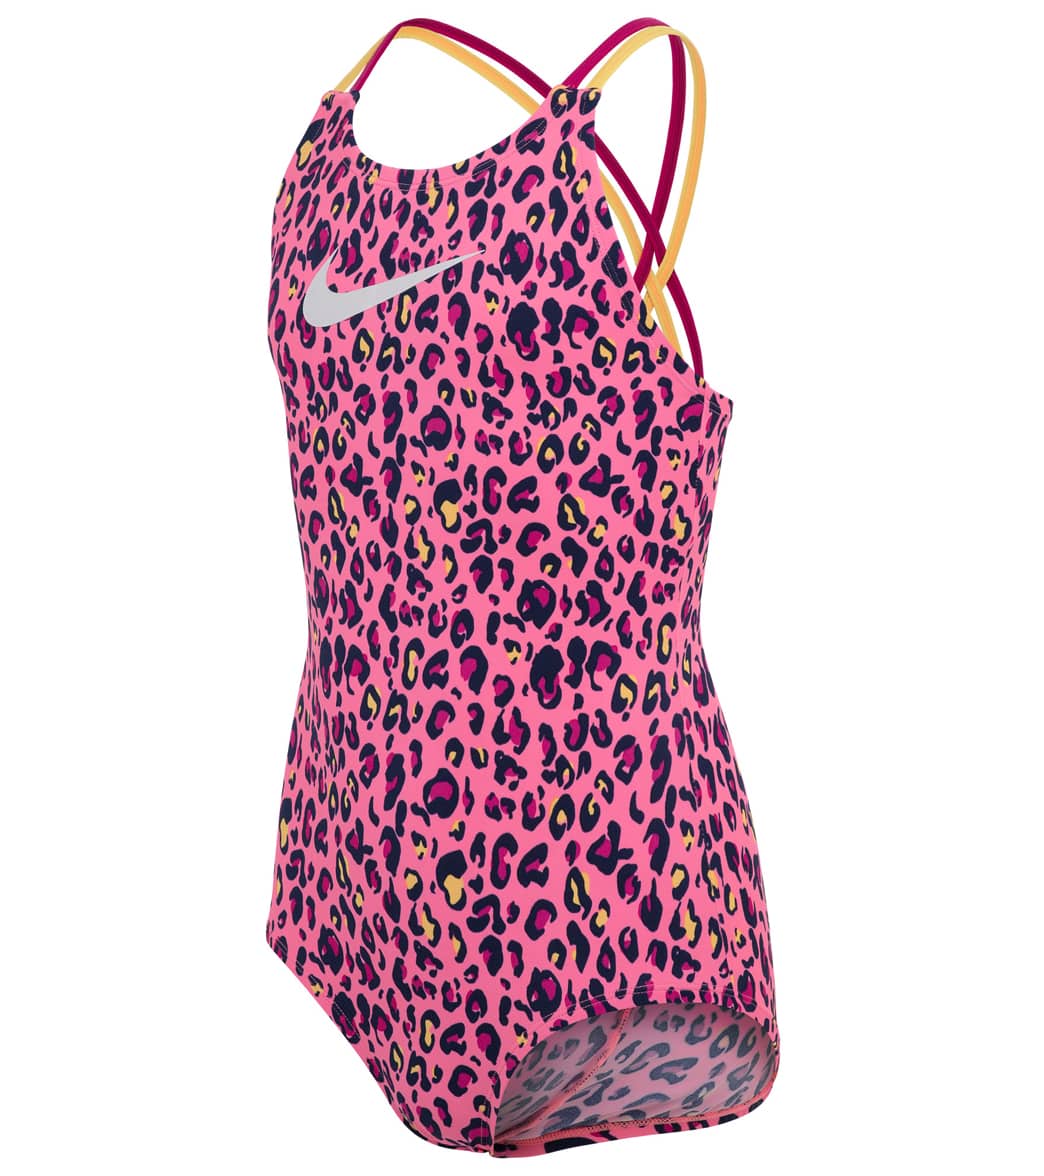 Nike Girls' Cheetah One Piece Swimsuit Big Kid - Sunset Pulse Small - Swimoutlet.com